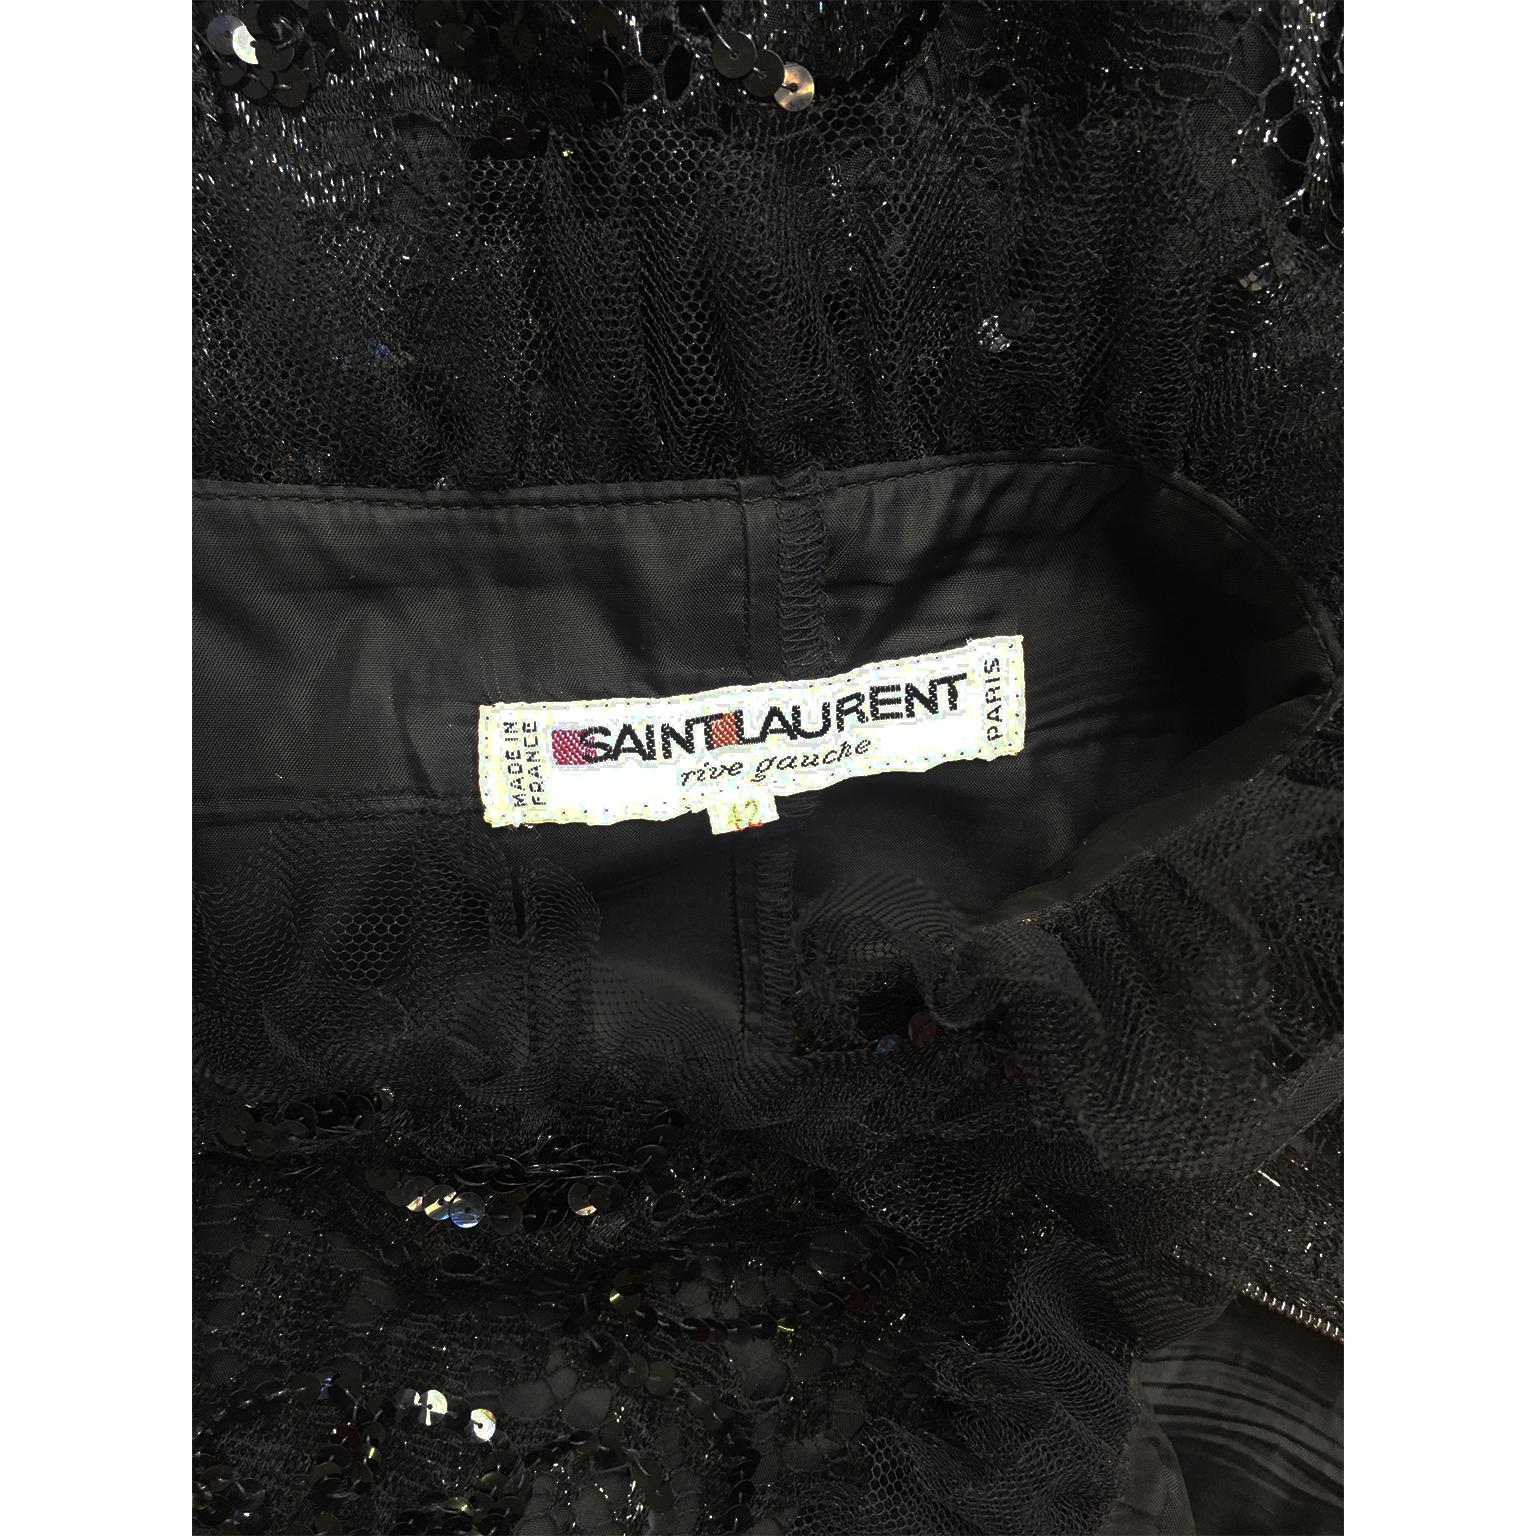 Yves Saint Laurent Black Lace Sequin Dress YSL AW 1987 For Sale 2